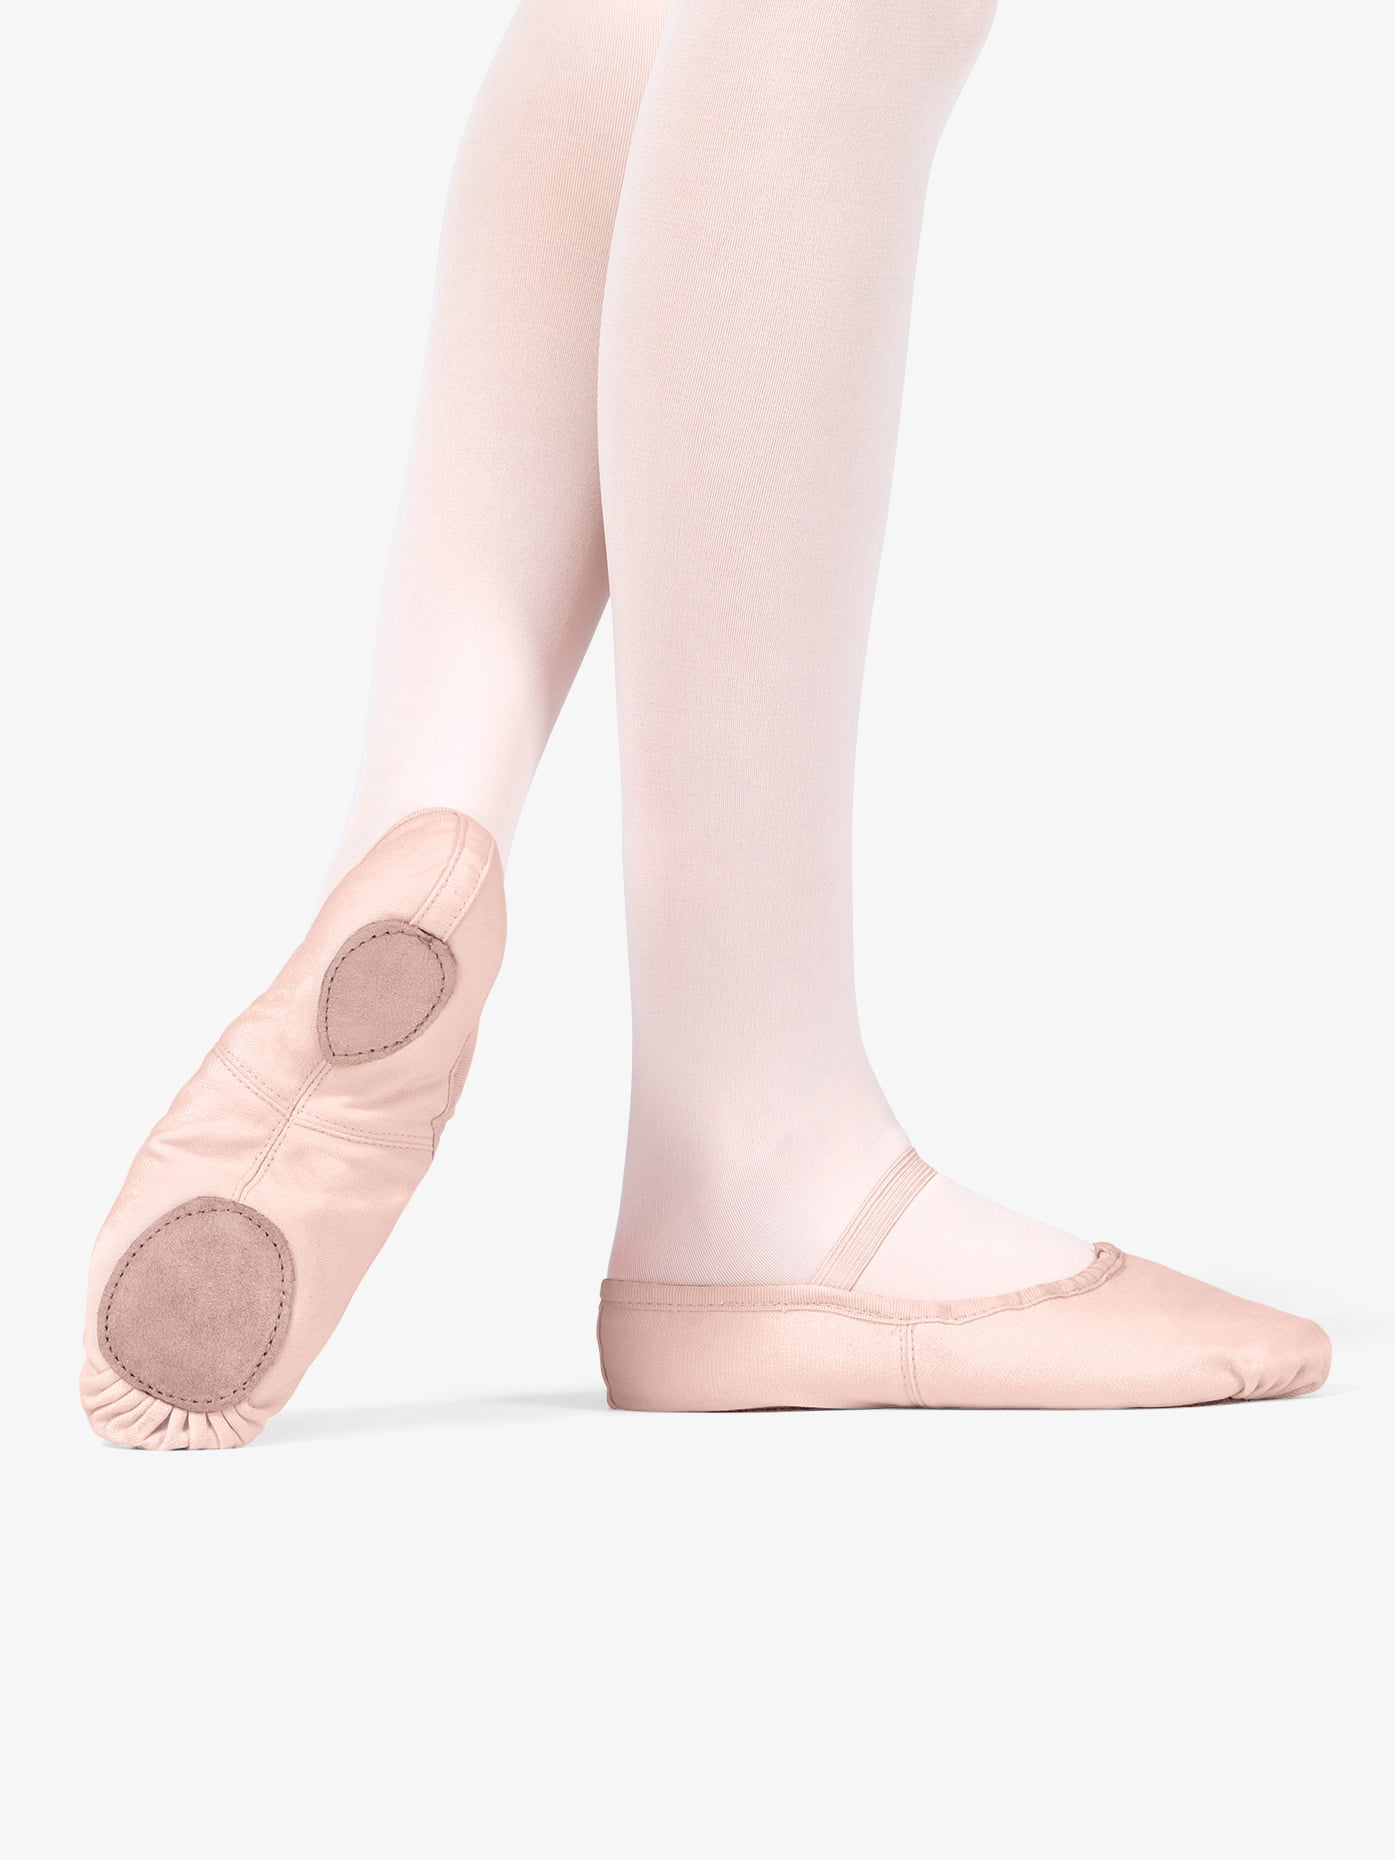 buy ballet shoes near me